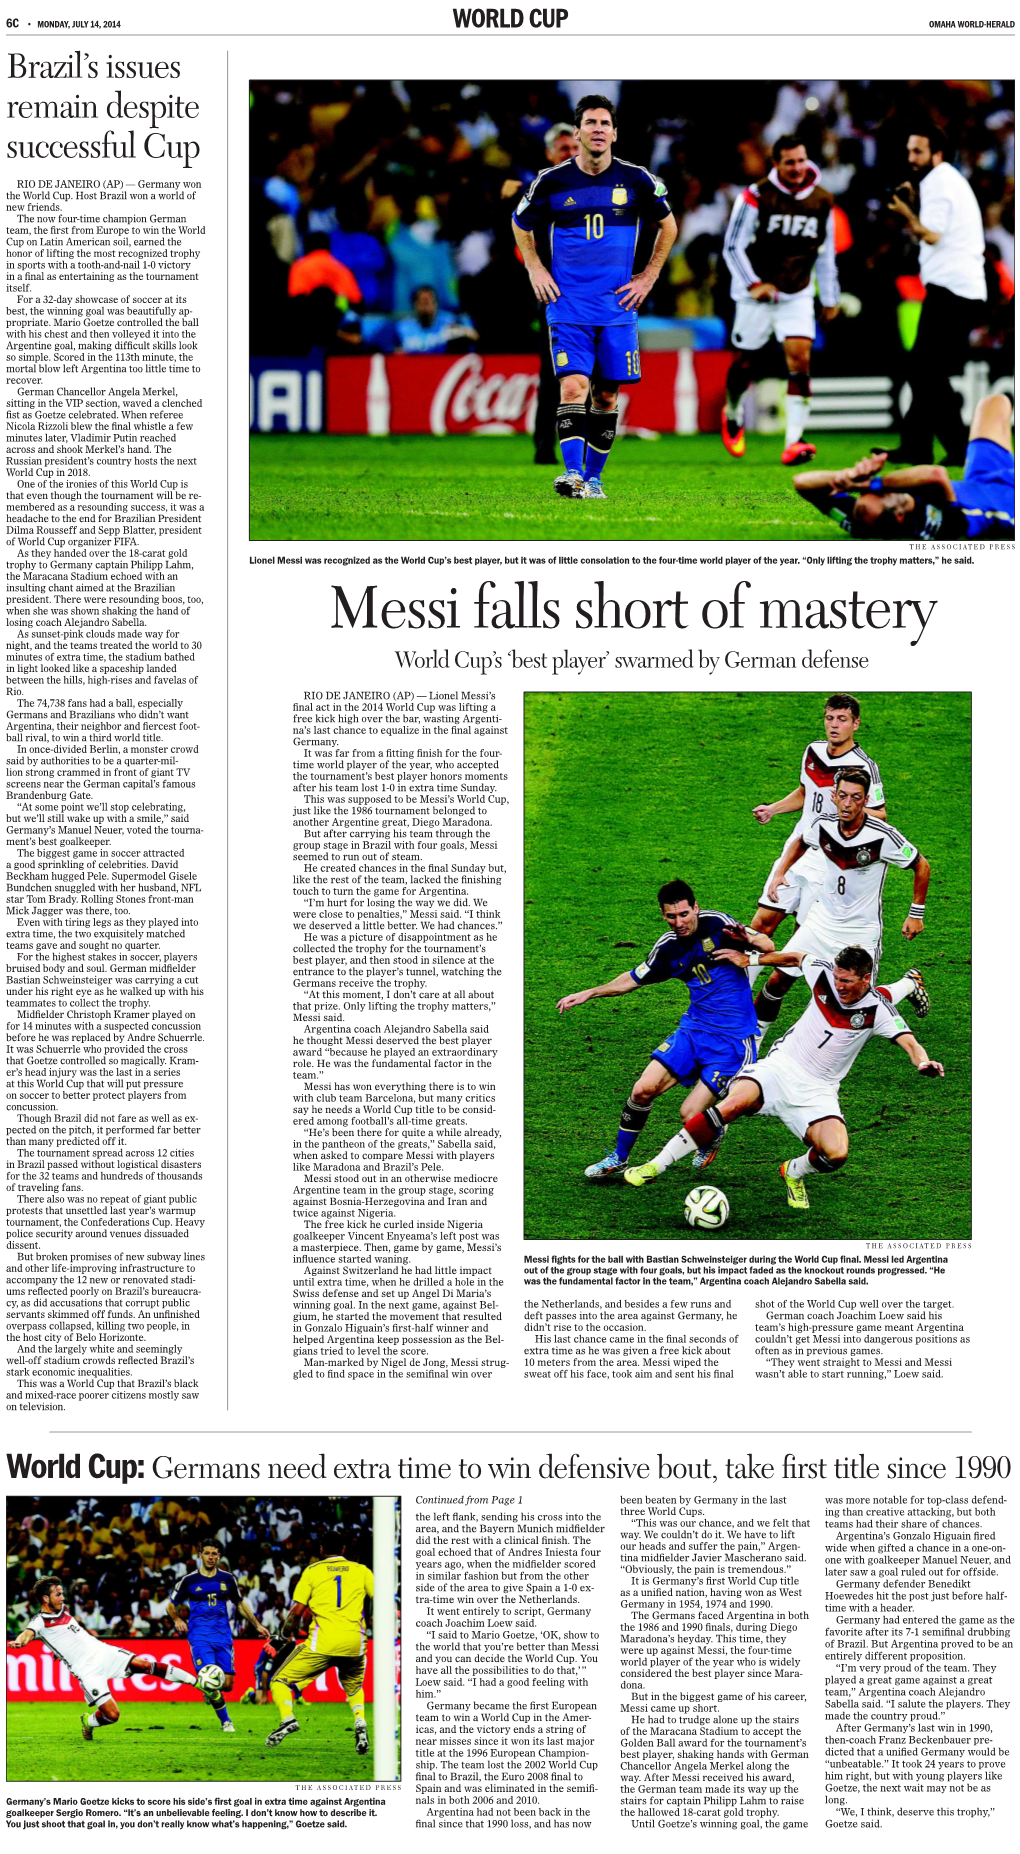 Messi Falls Short of Mastery